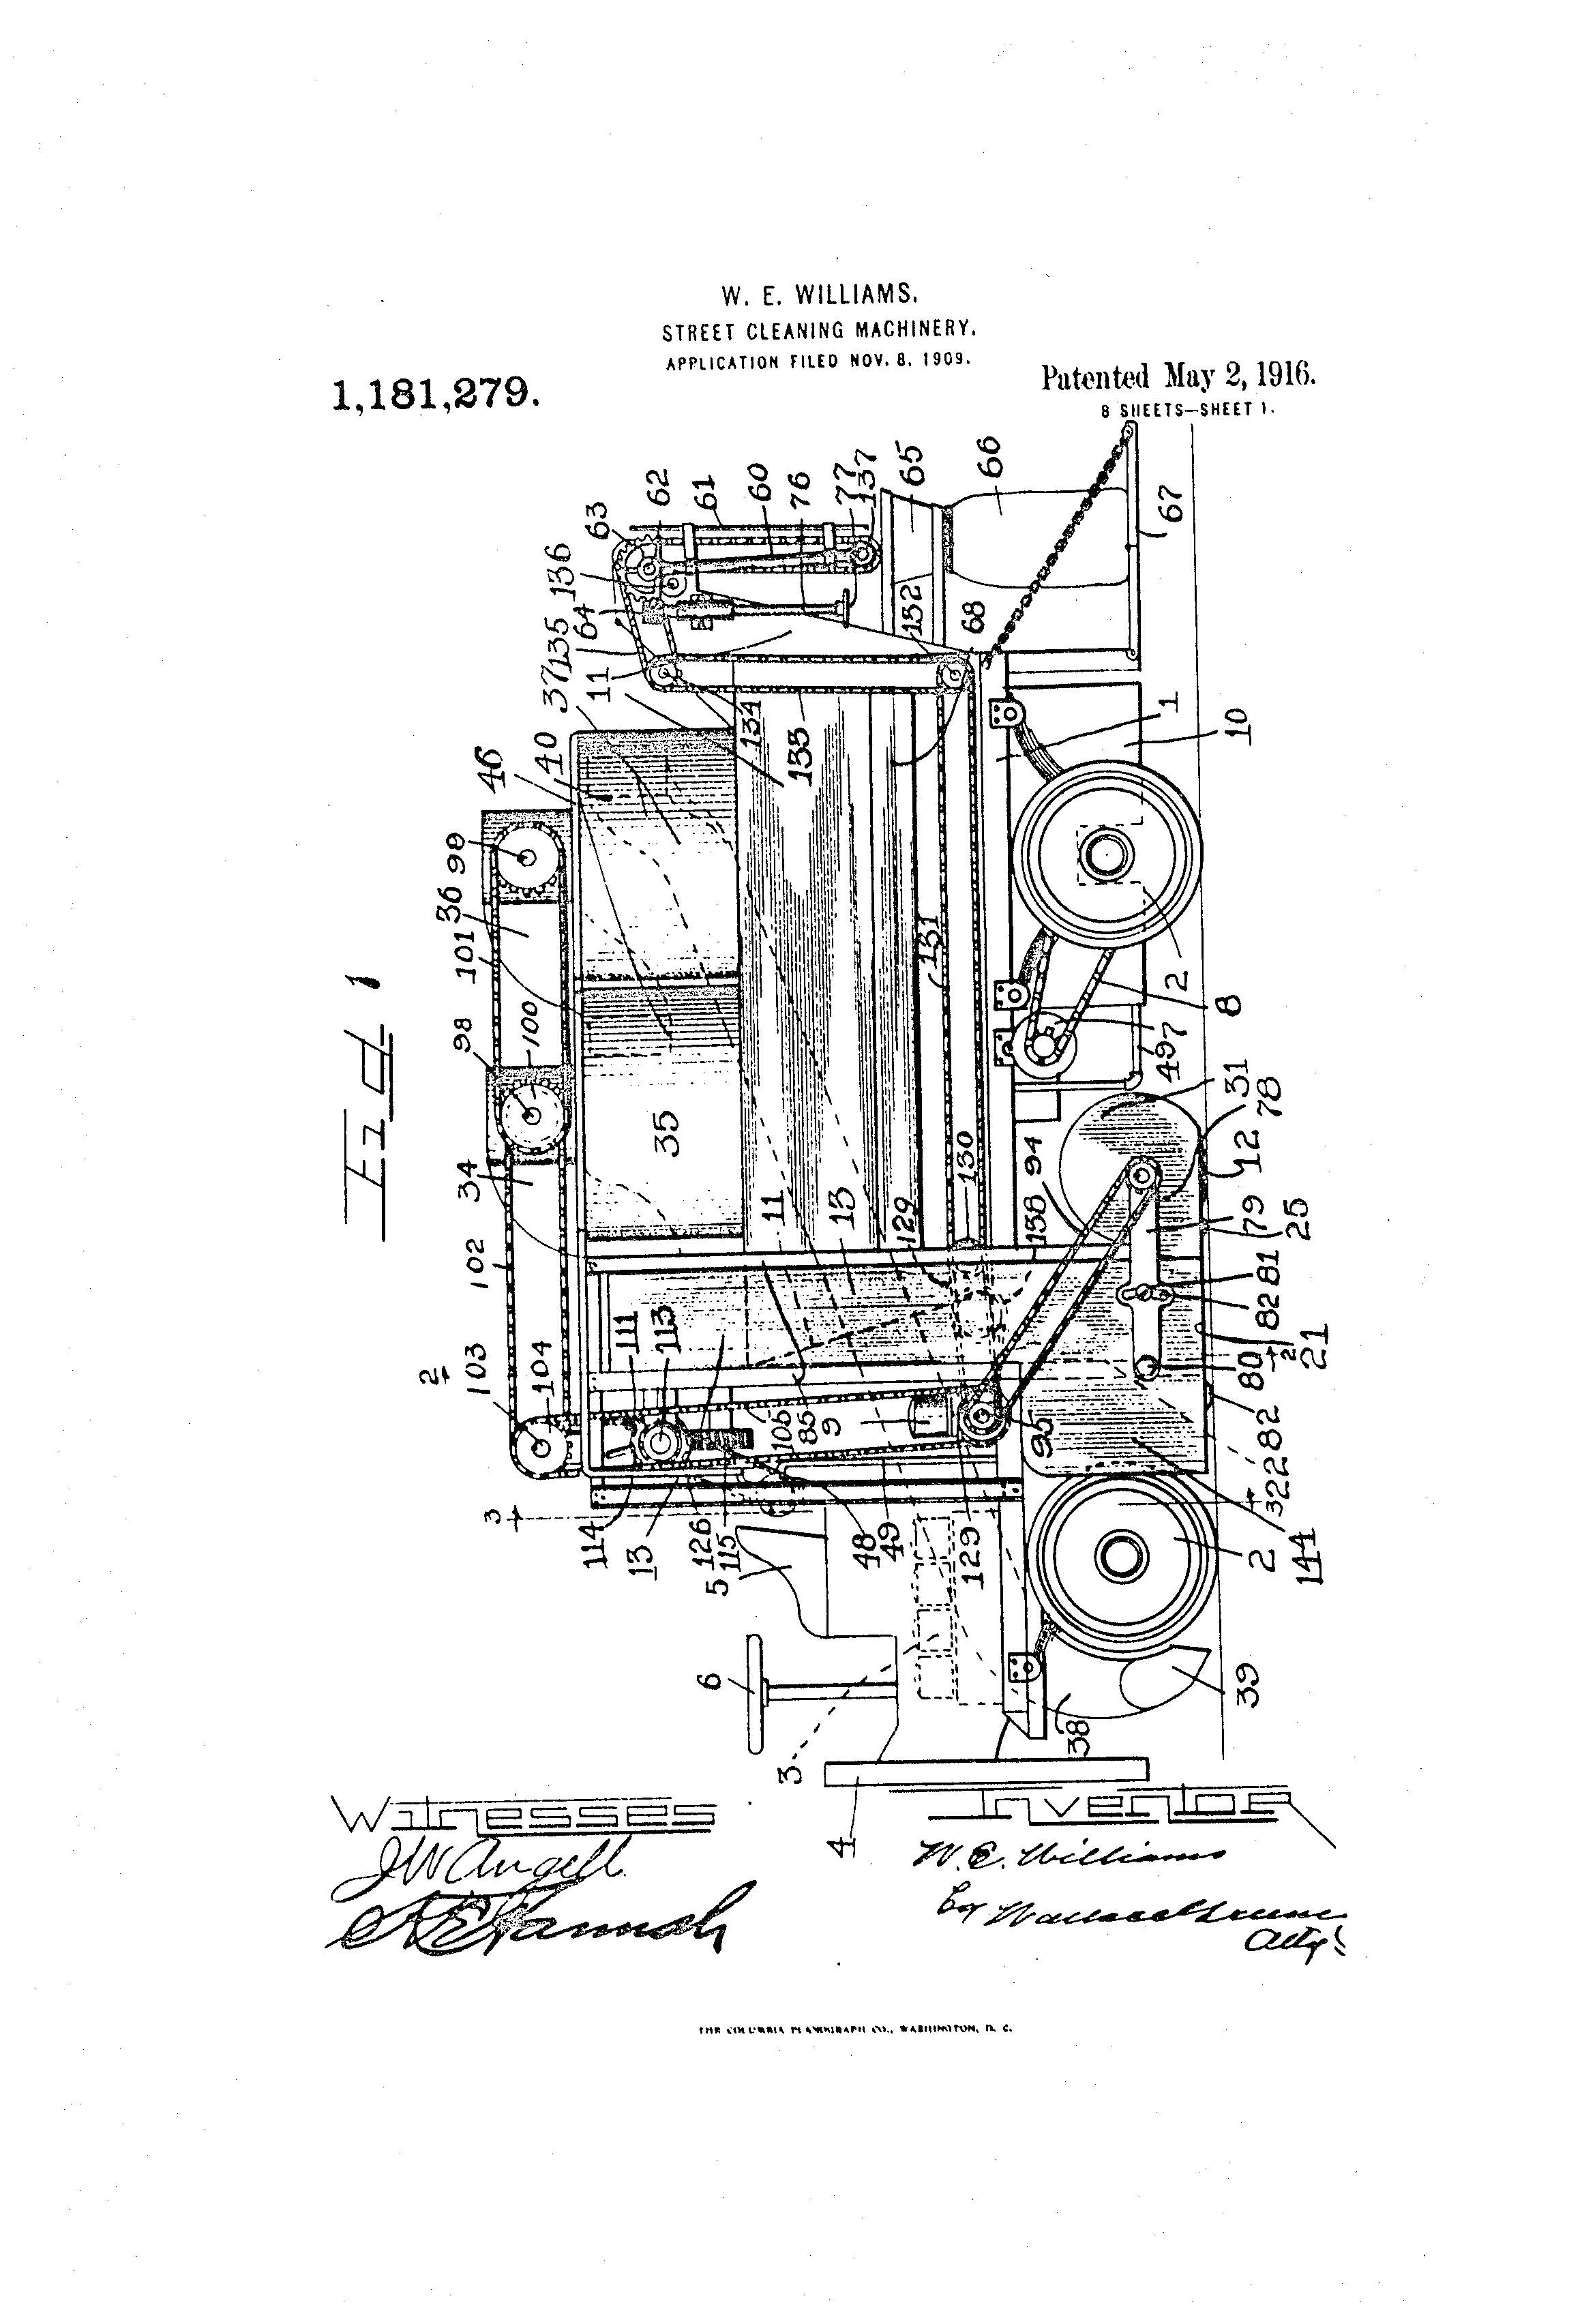 street cleaning machine patent